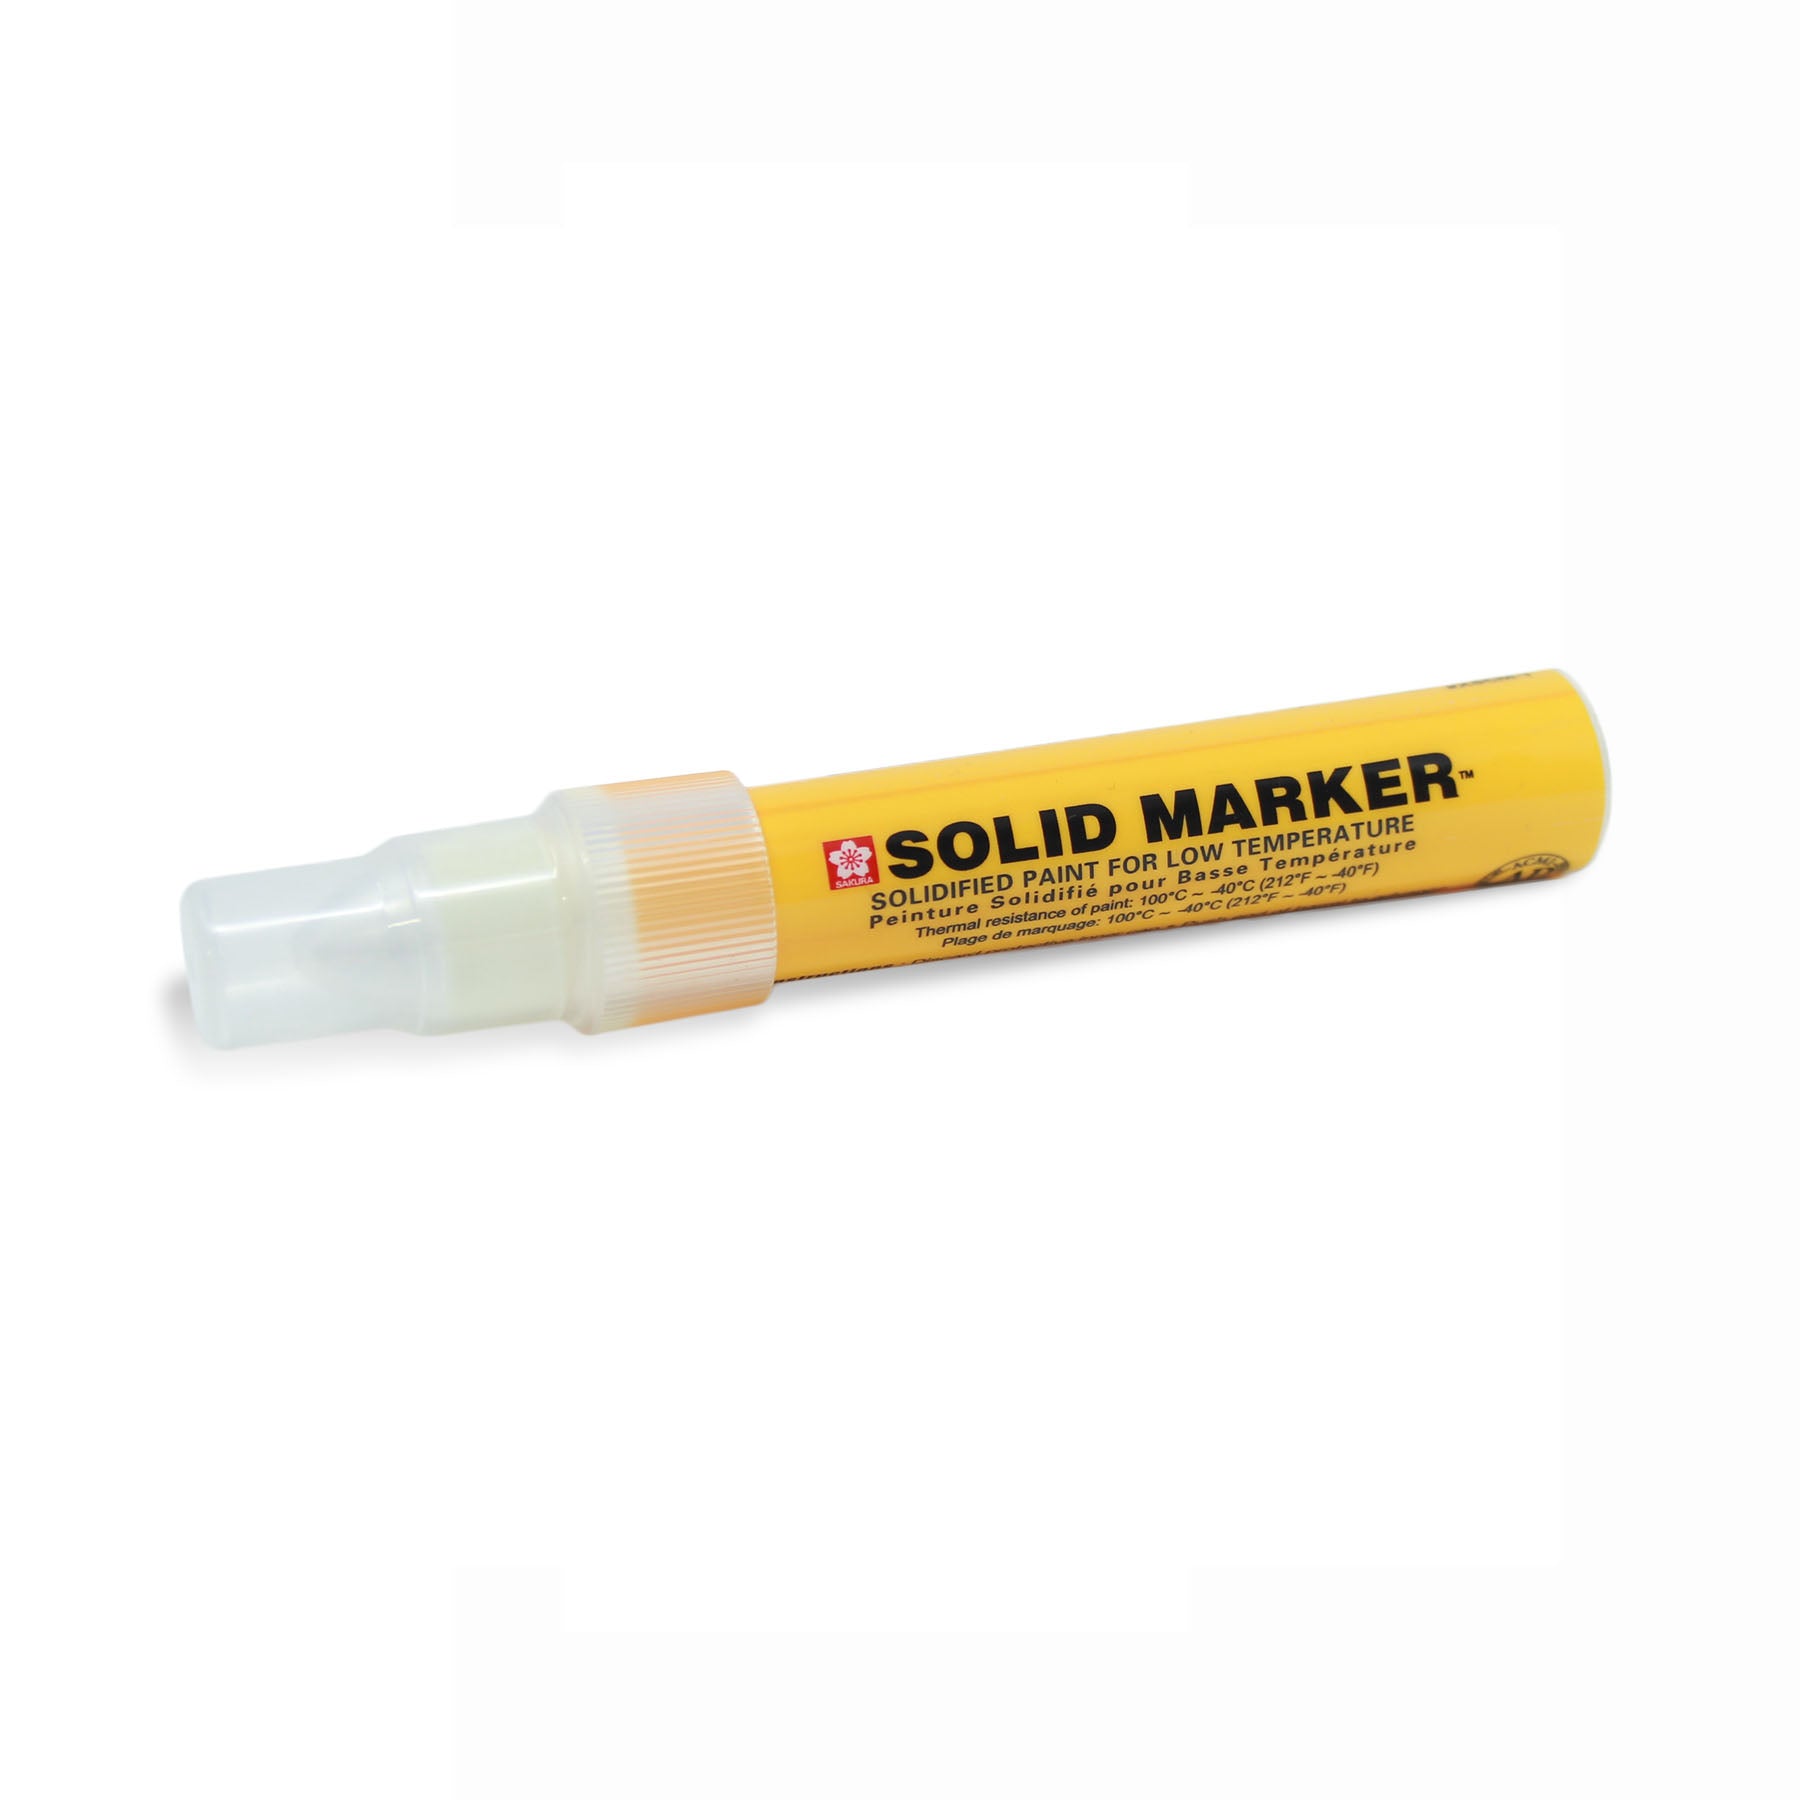 Sakura XSC-T Solid Marker for Low Temperature